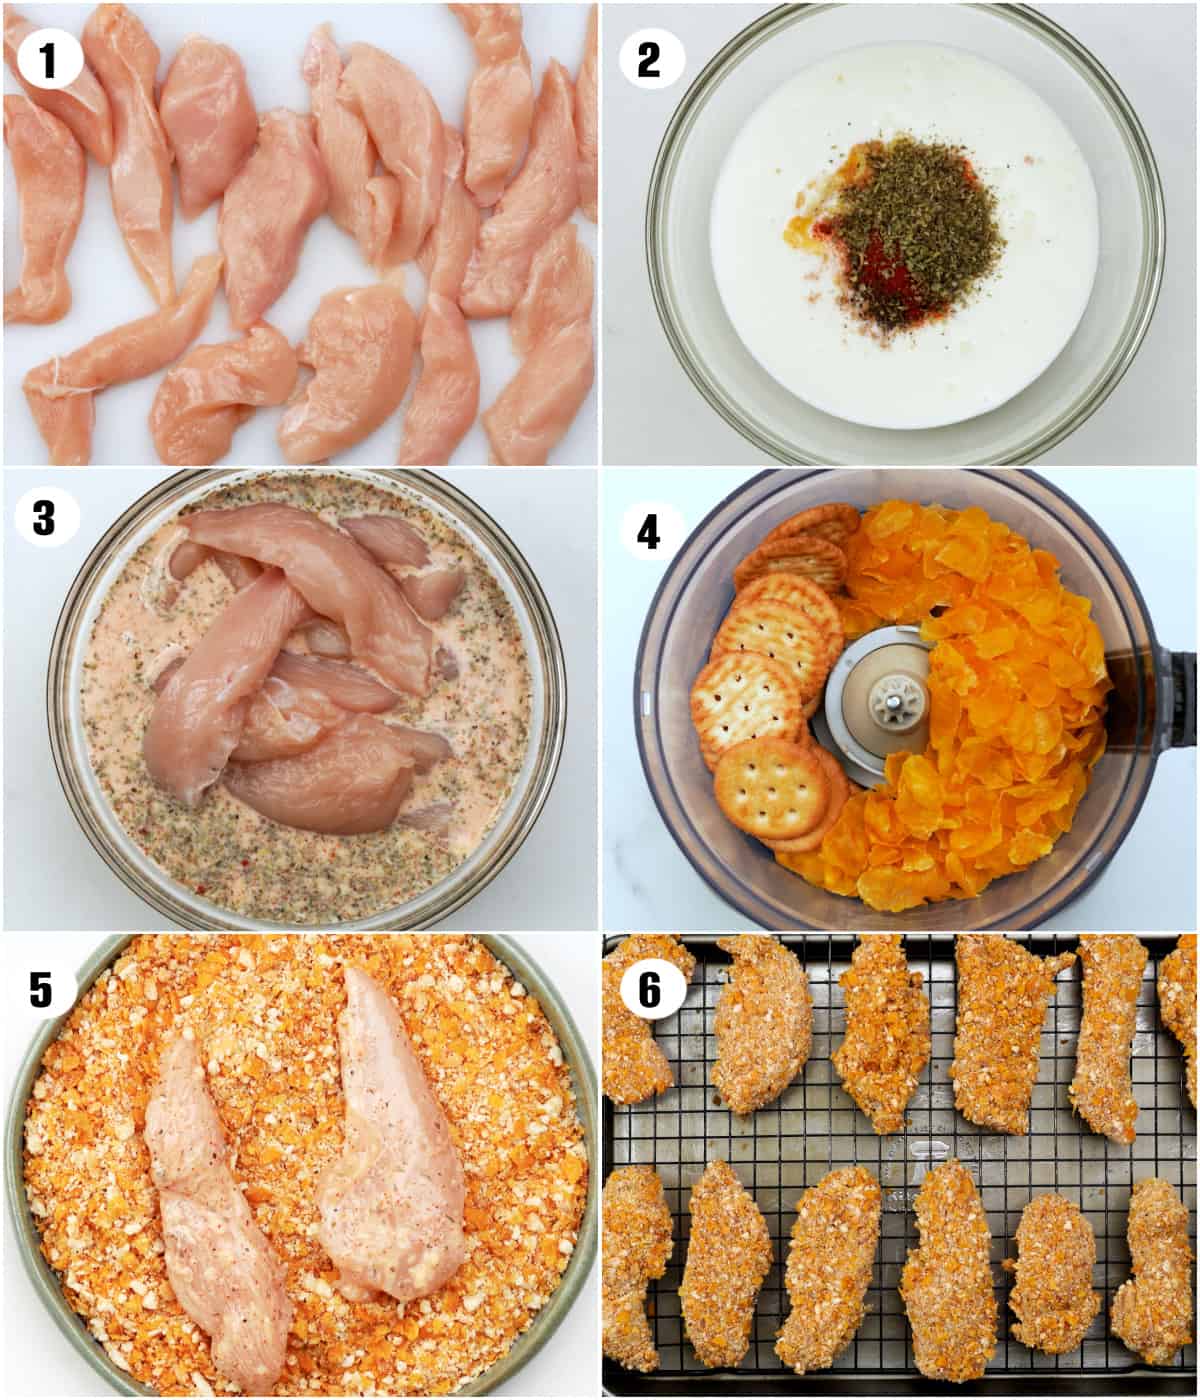 Steps showing making of cornflake chicken.